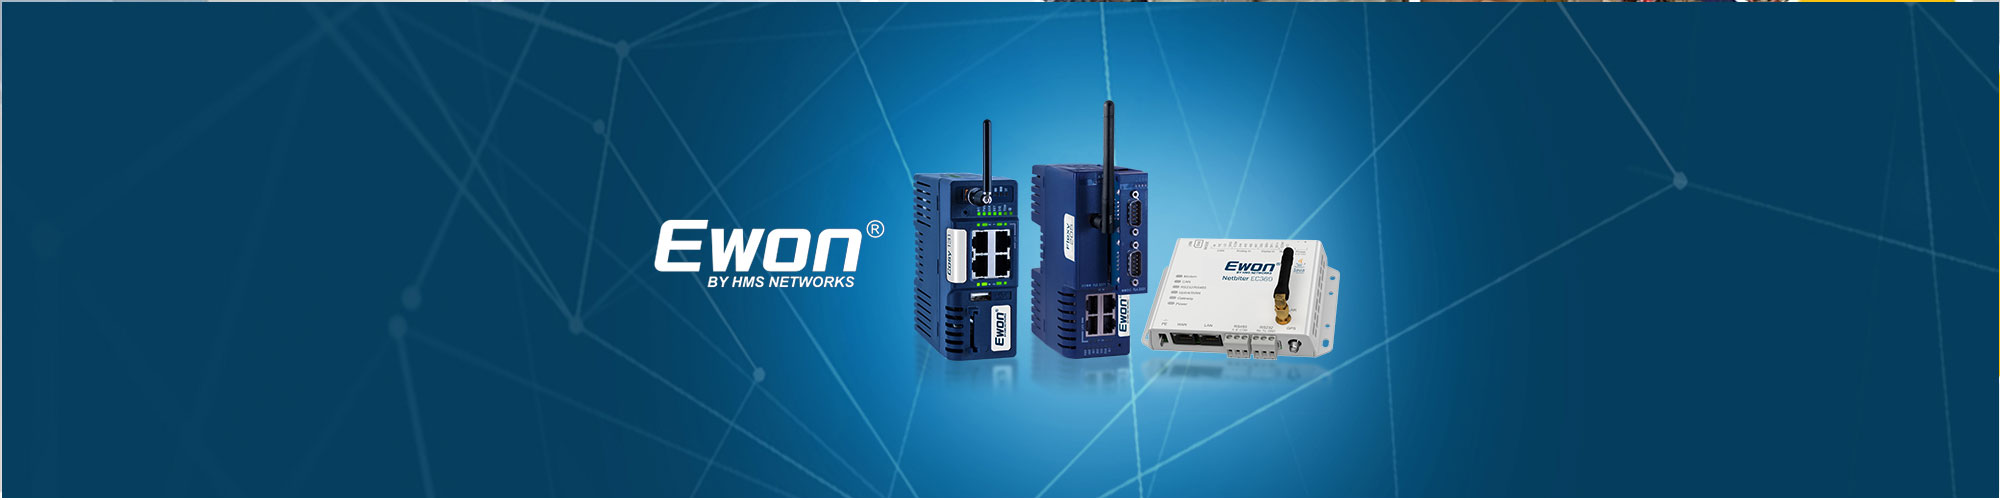 eWON Distributor | Electric Supply & Equipment